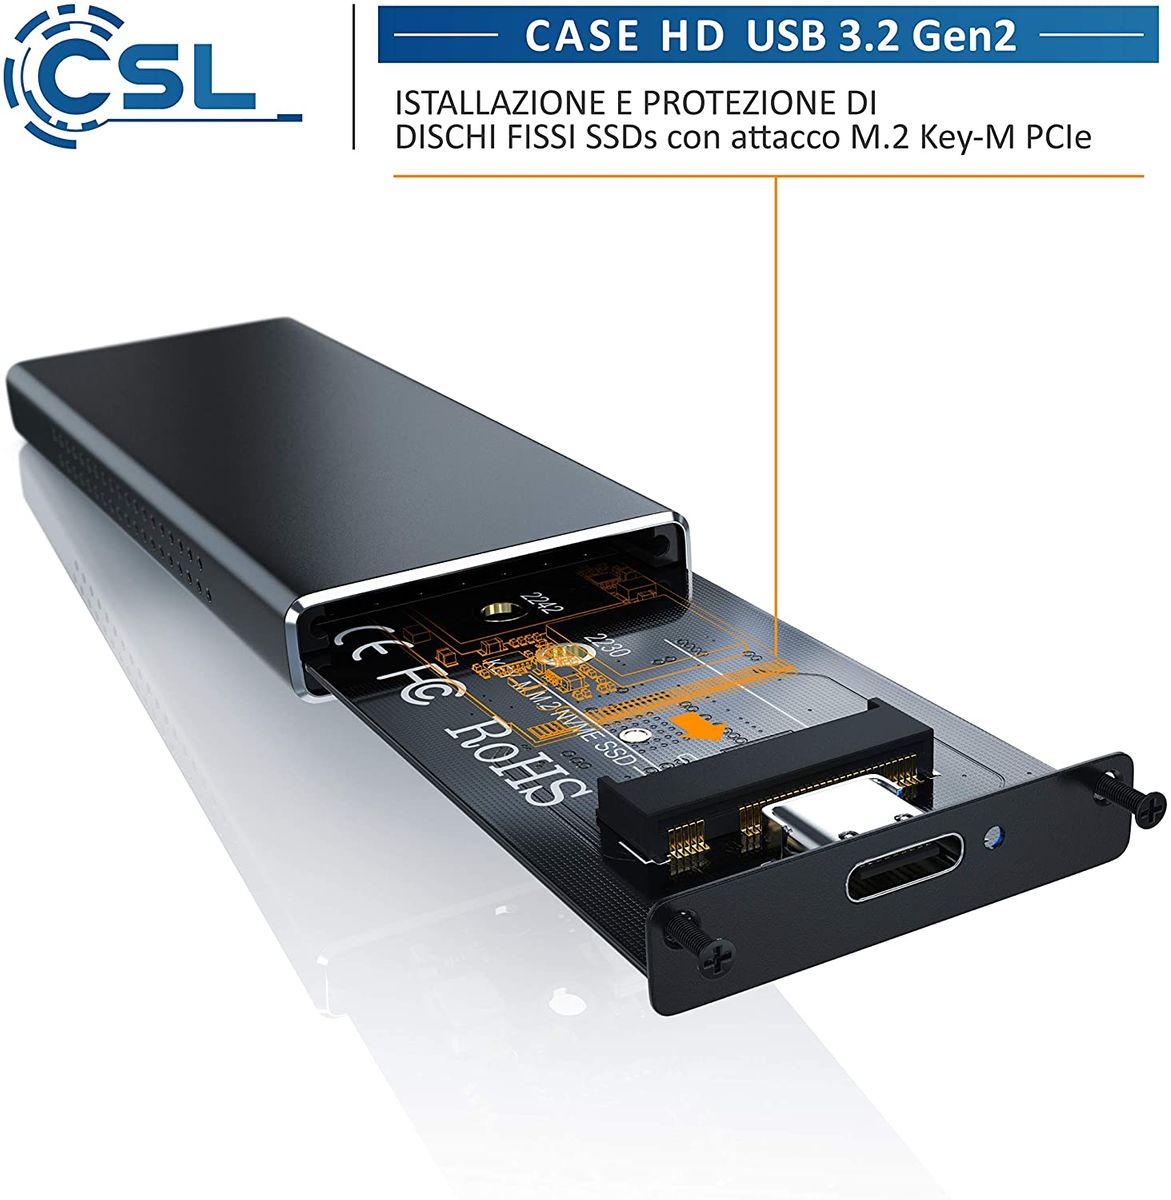 CSL - Case USB 3.2 Gen2 M.2 Key-M PCIe Extern - 10 Gbit s - Alluminio - per NVME M.2 SSDs - Supporta UASP - Plug e Play - Hot-Plug - Cavo Tipo C - Tipo A